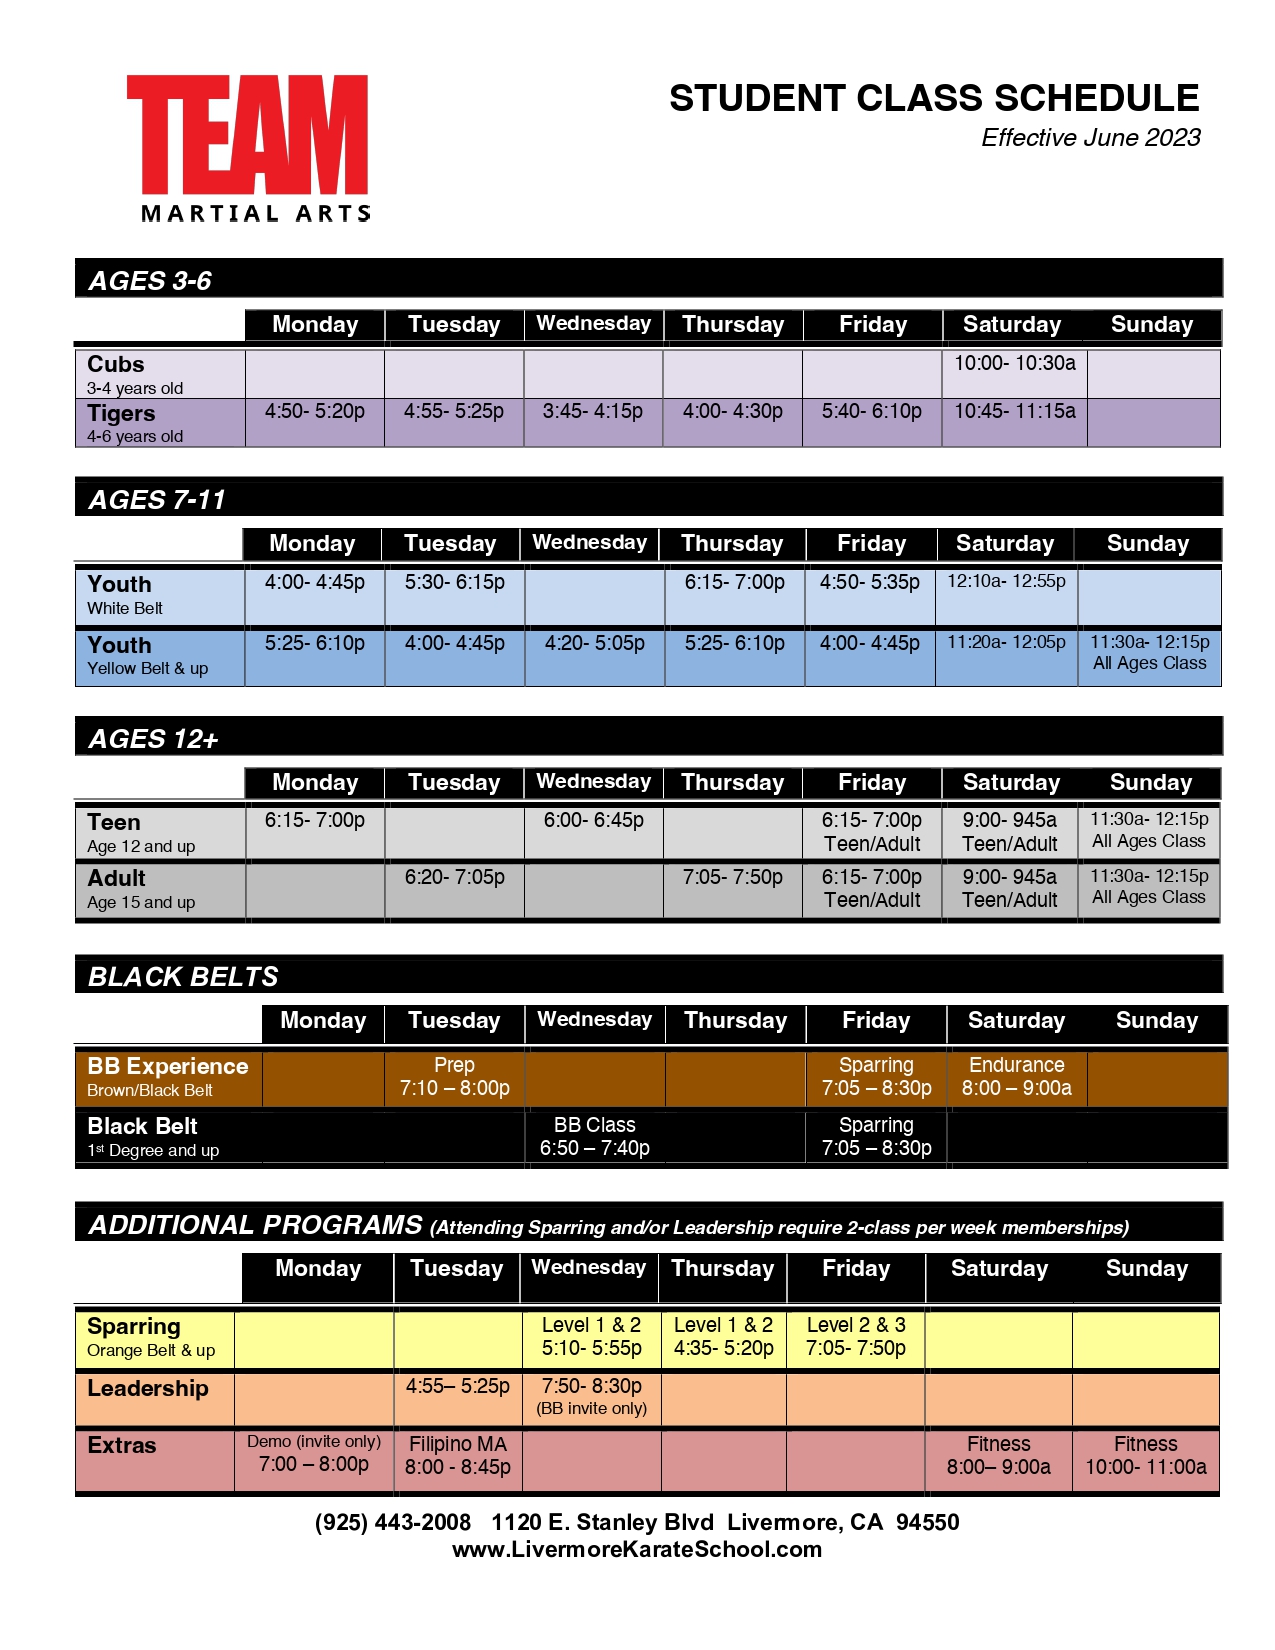 Schedule By Class June 2023